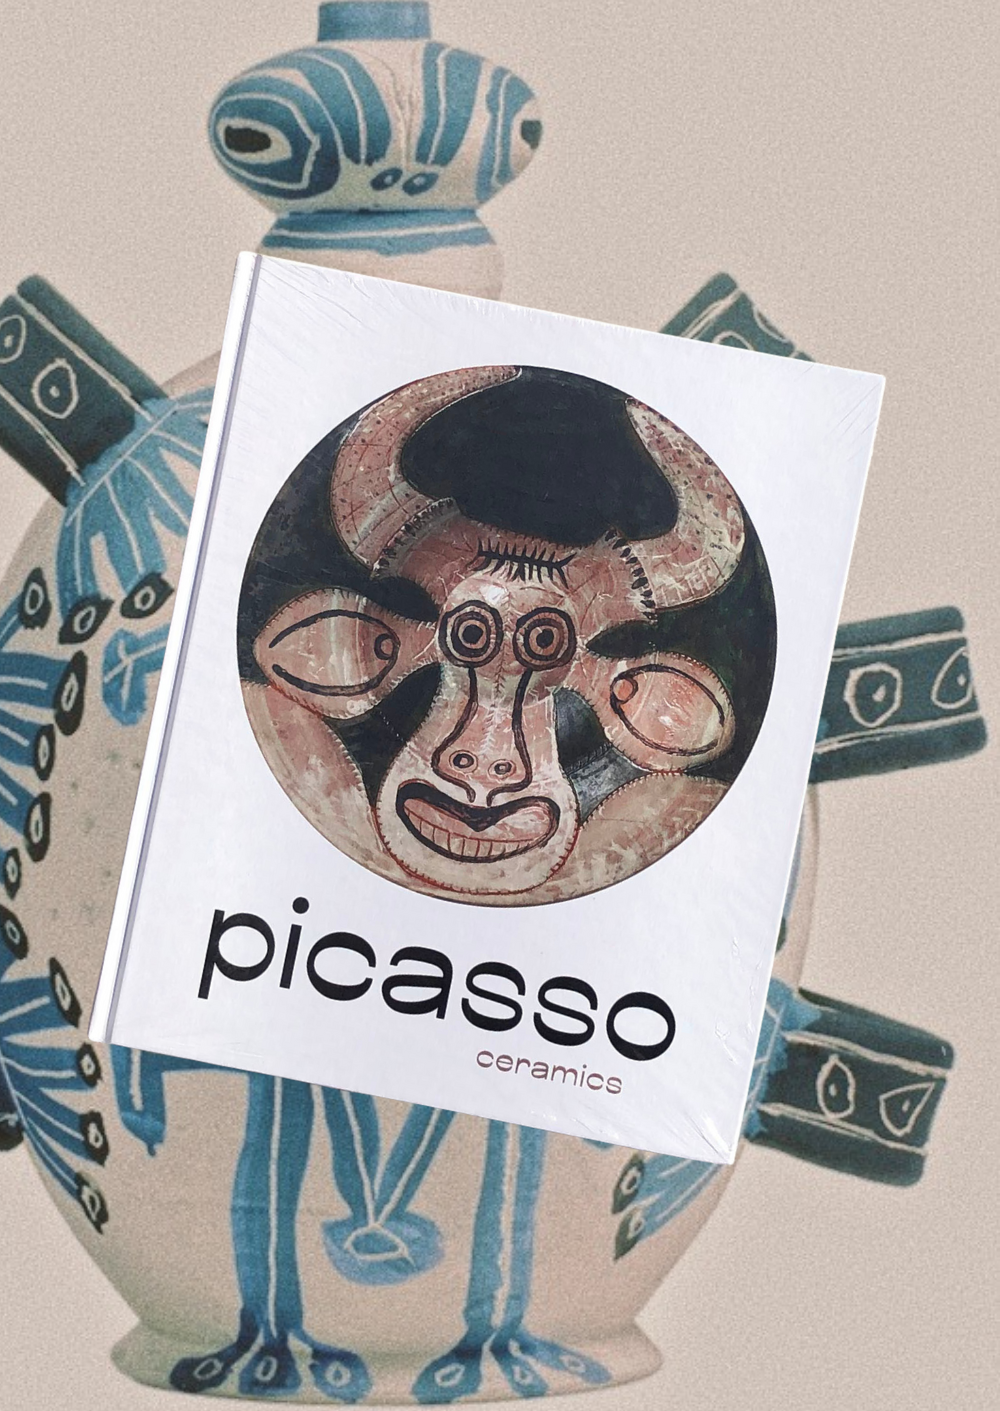 Picasso Ceramics